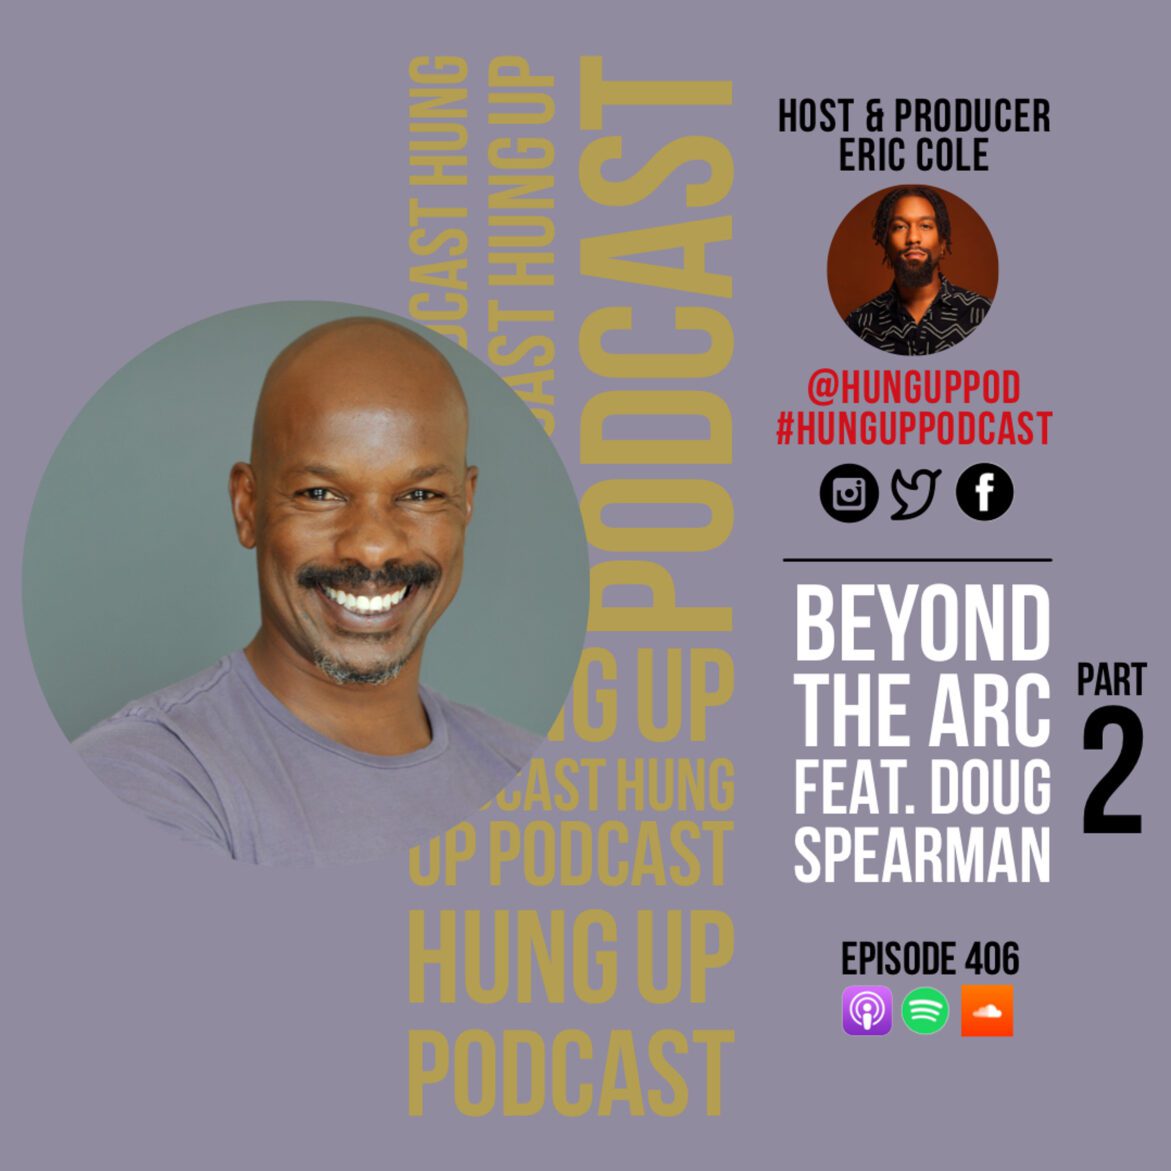 Black Podcasting - Episode 406: Beyond the Arc Pt. 2 Feat. Doug Spearman